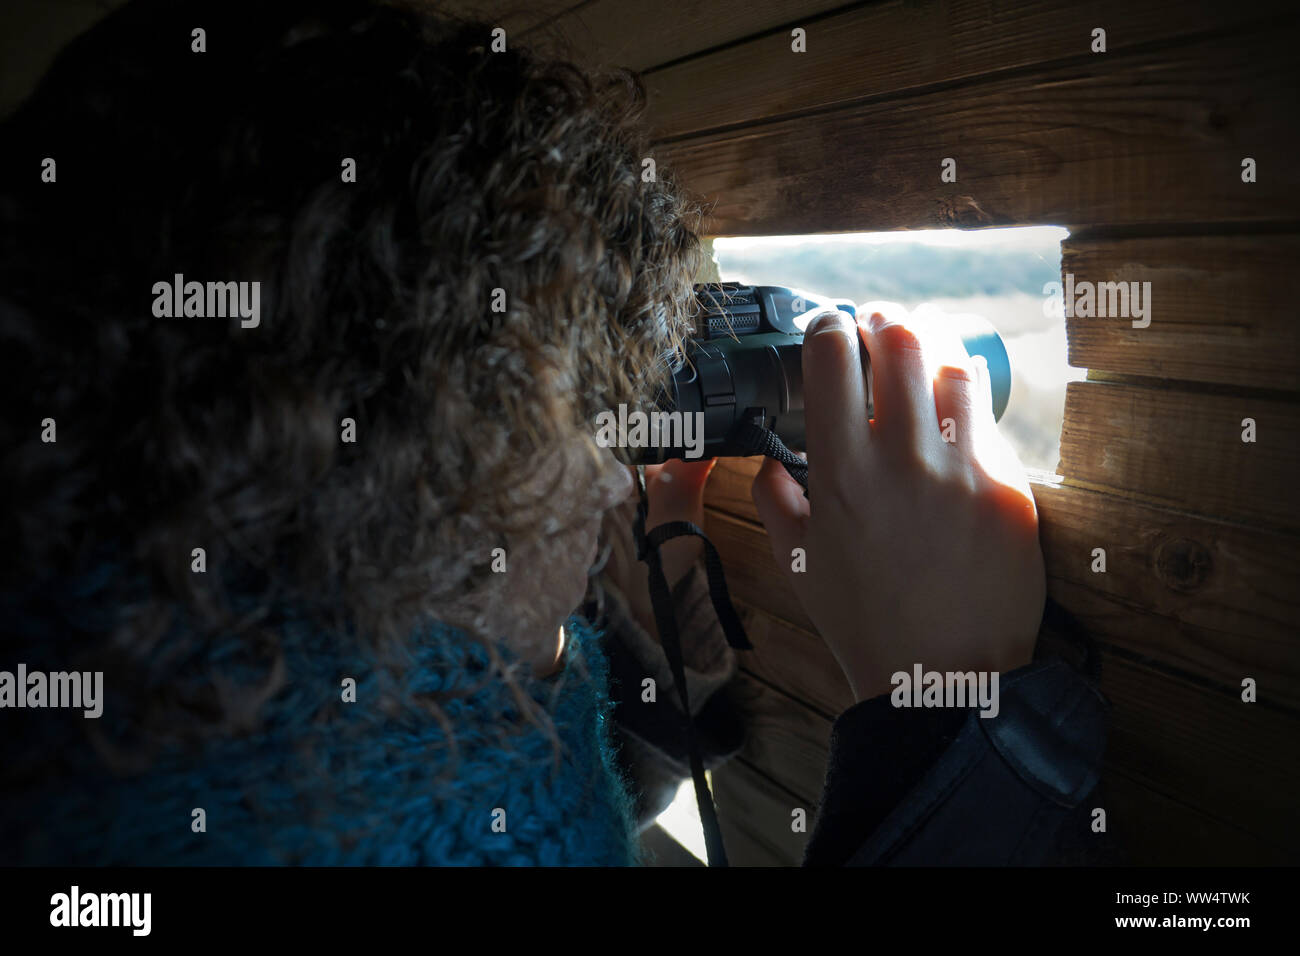 Woman hidden in a shack, watching wildlife though binoculars. Stock Photo